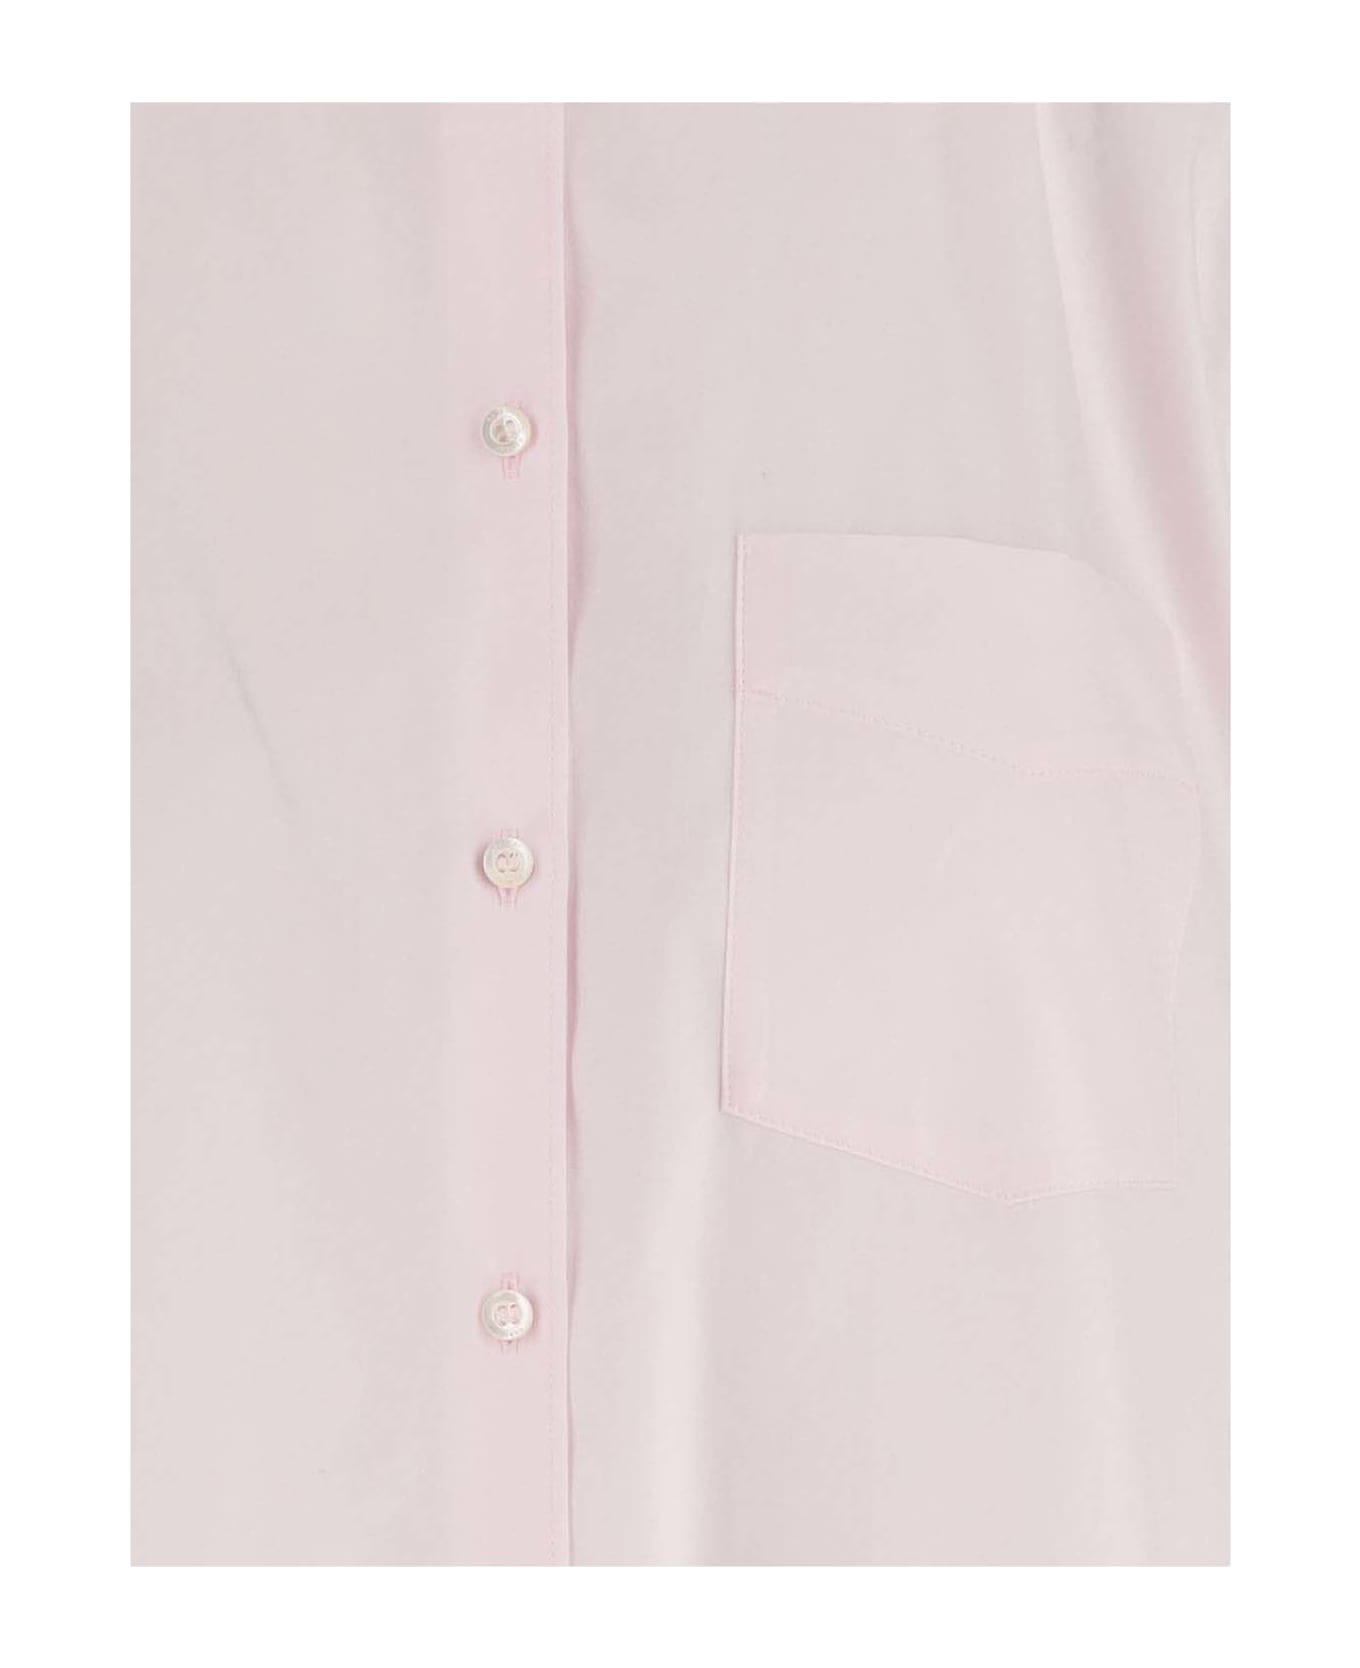 Aspesi Cotton Shirt - Pink